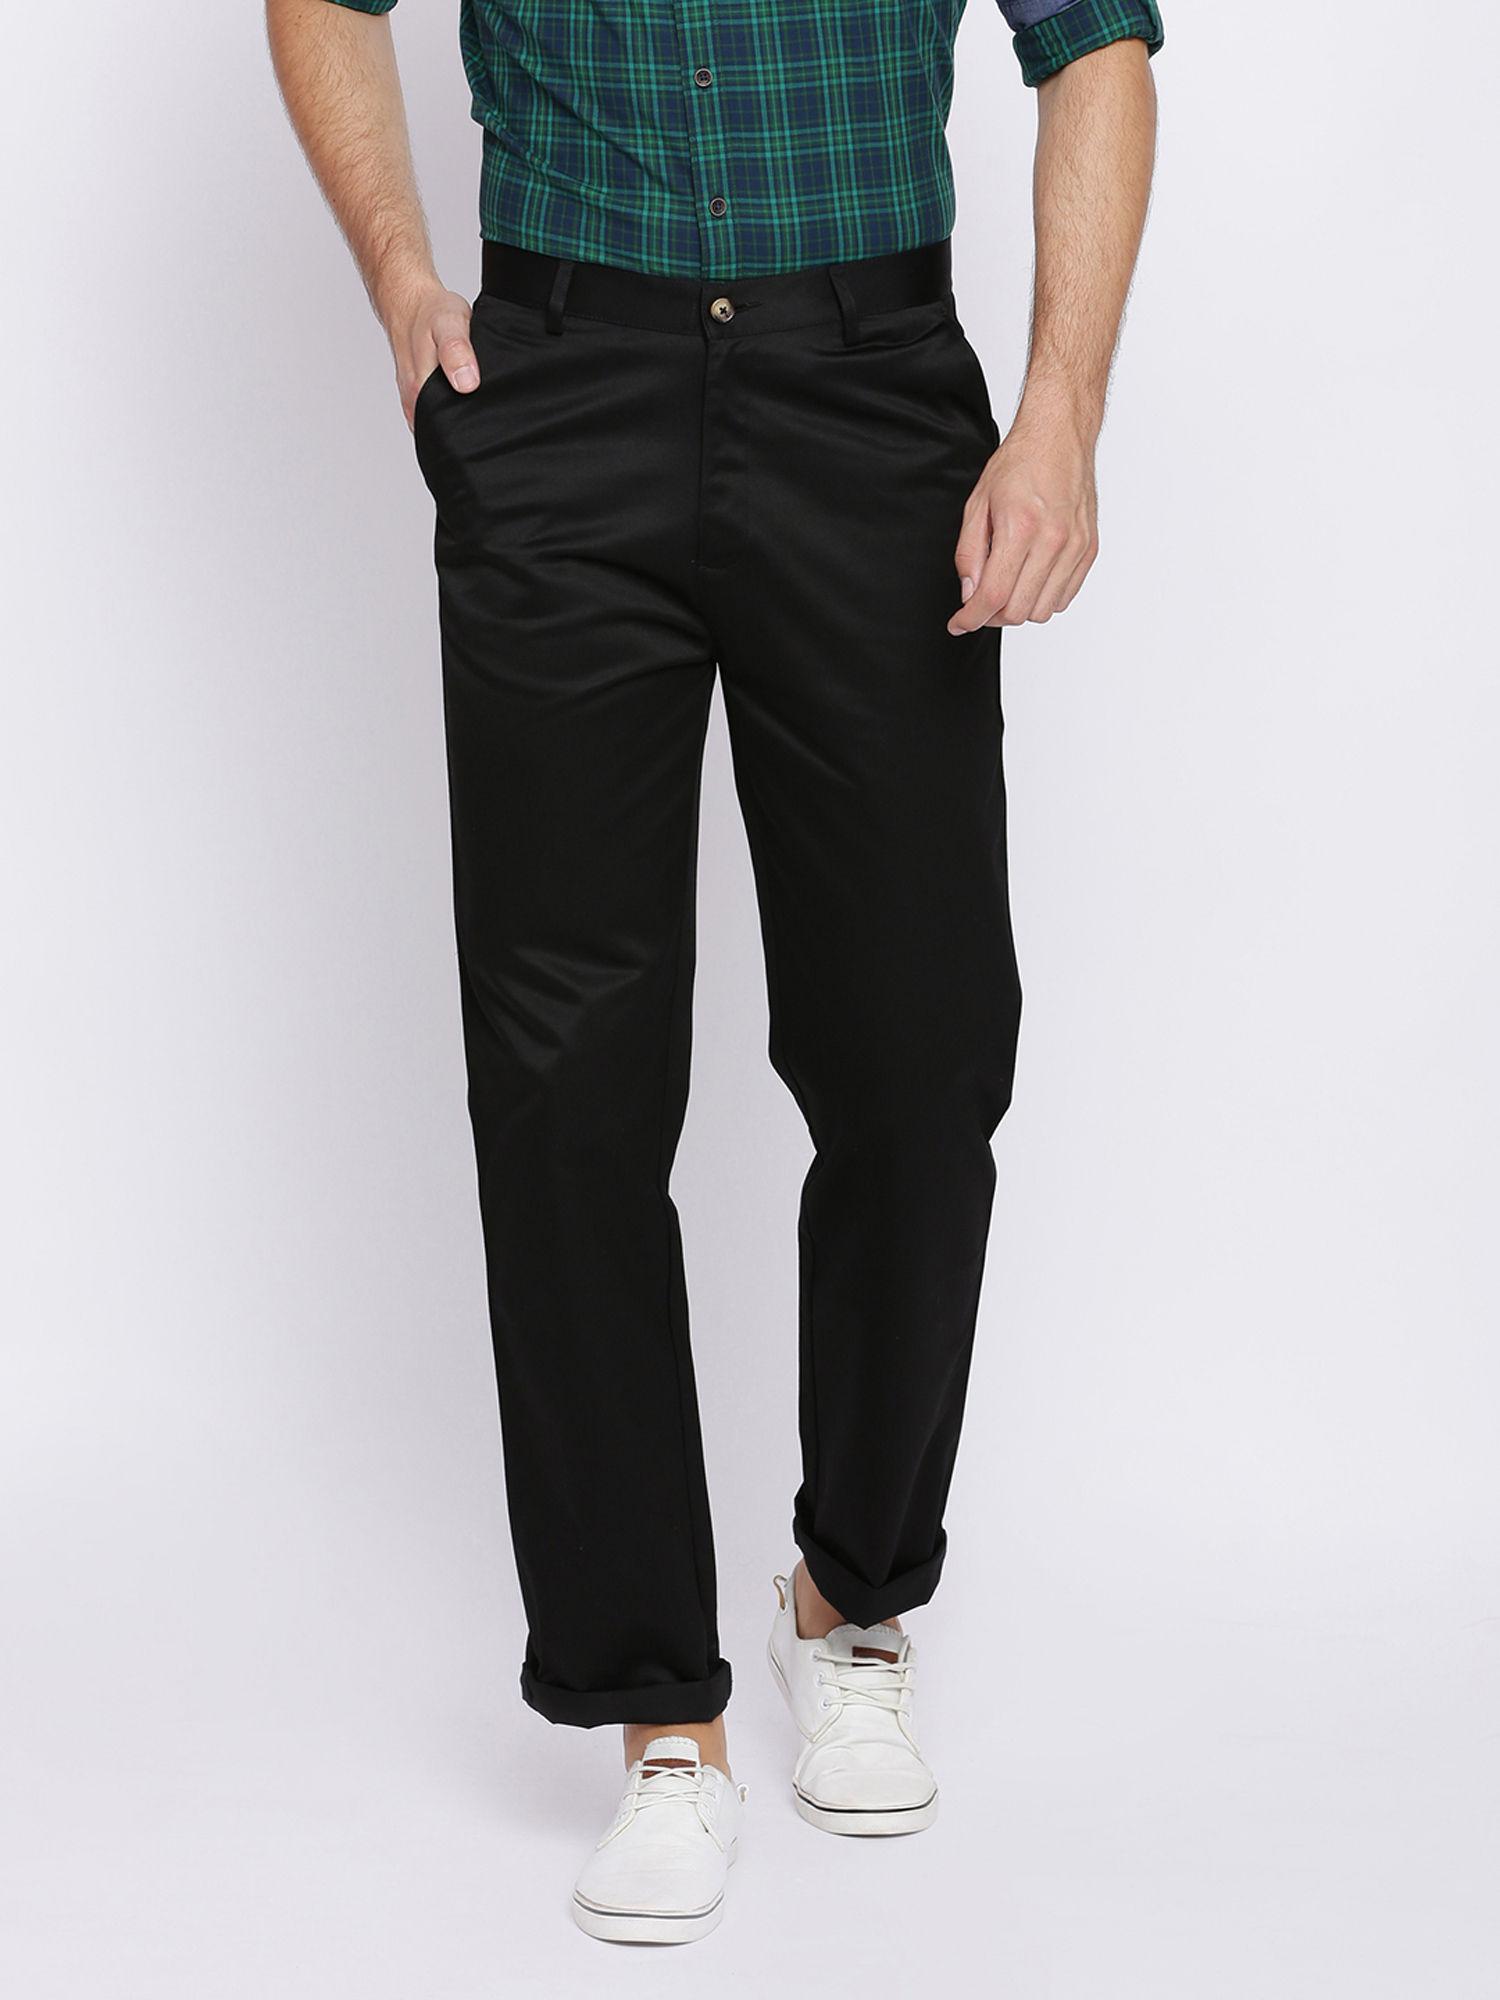 comfort fit black satin weave poly cotton trousers